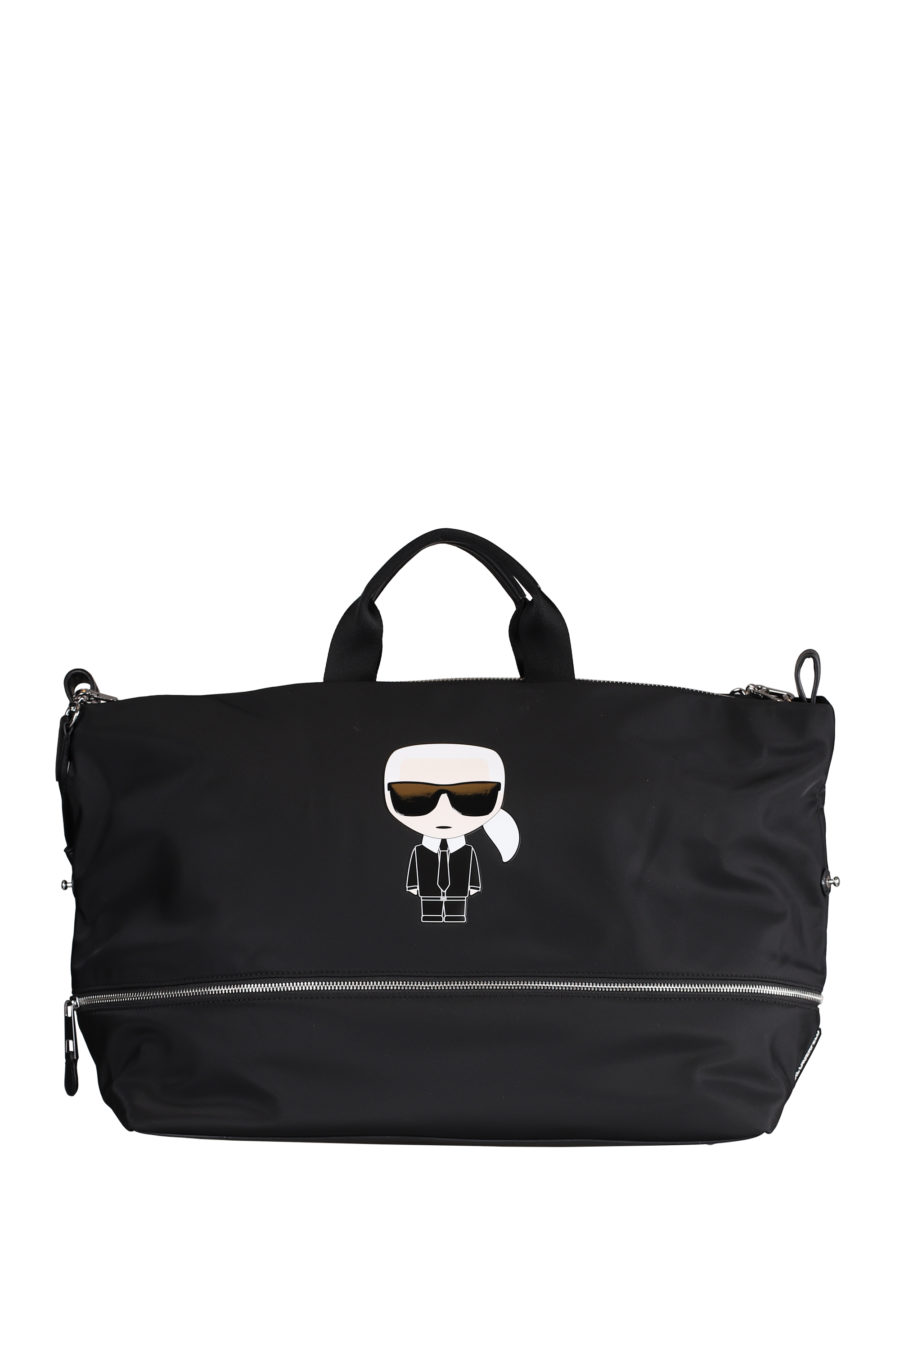 Black travel bag with "Karl" - IMG 9789